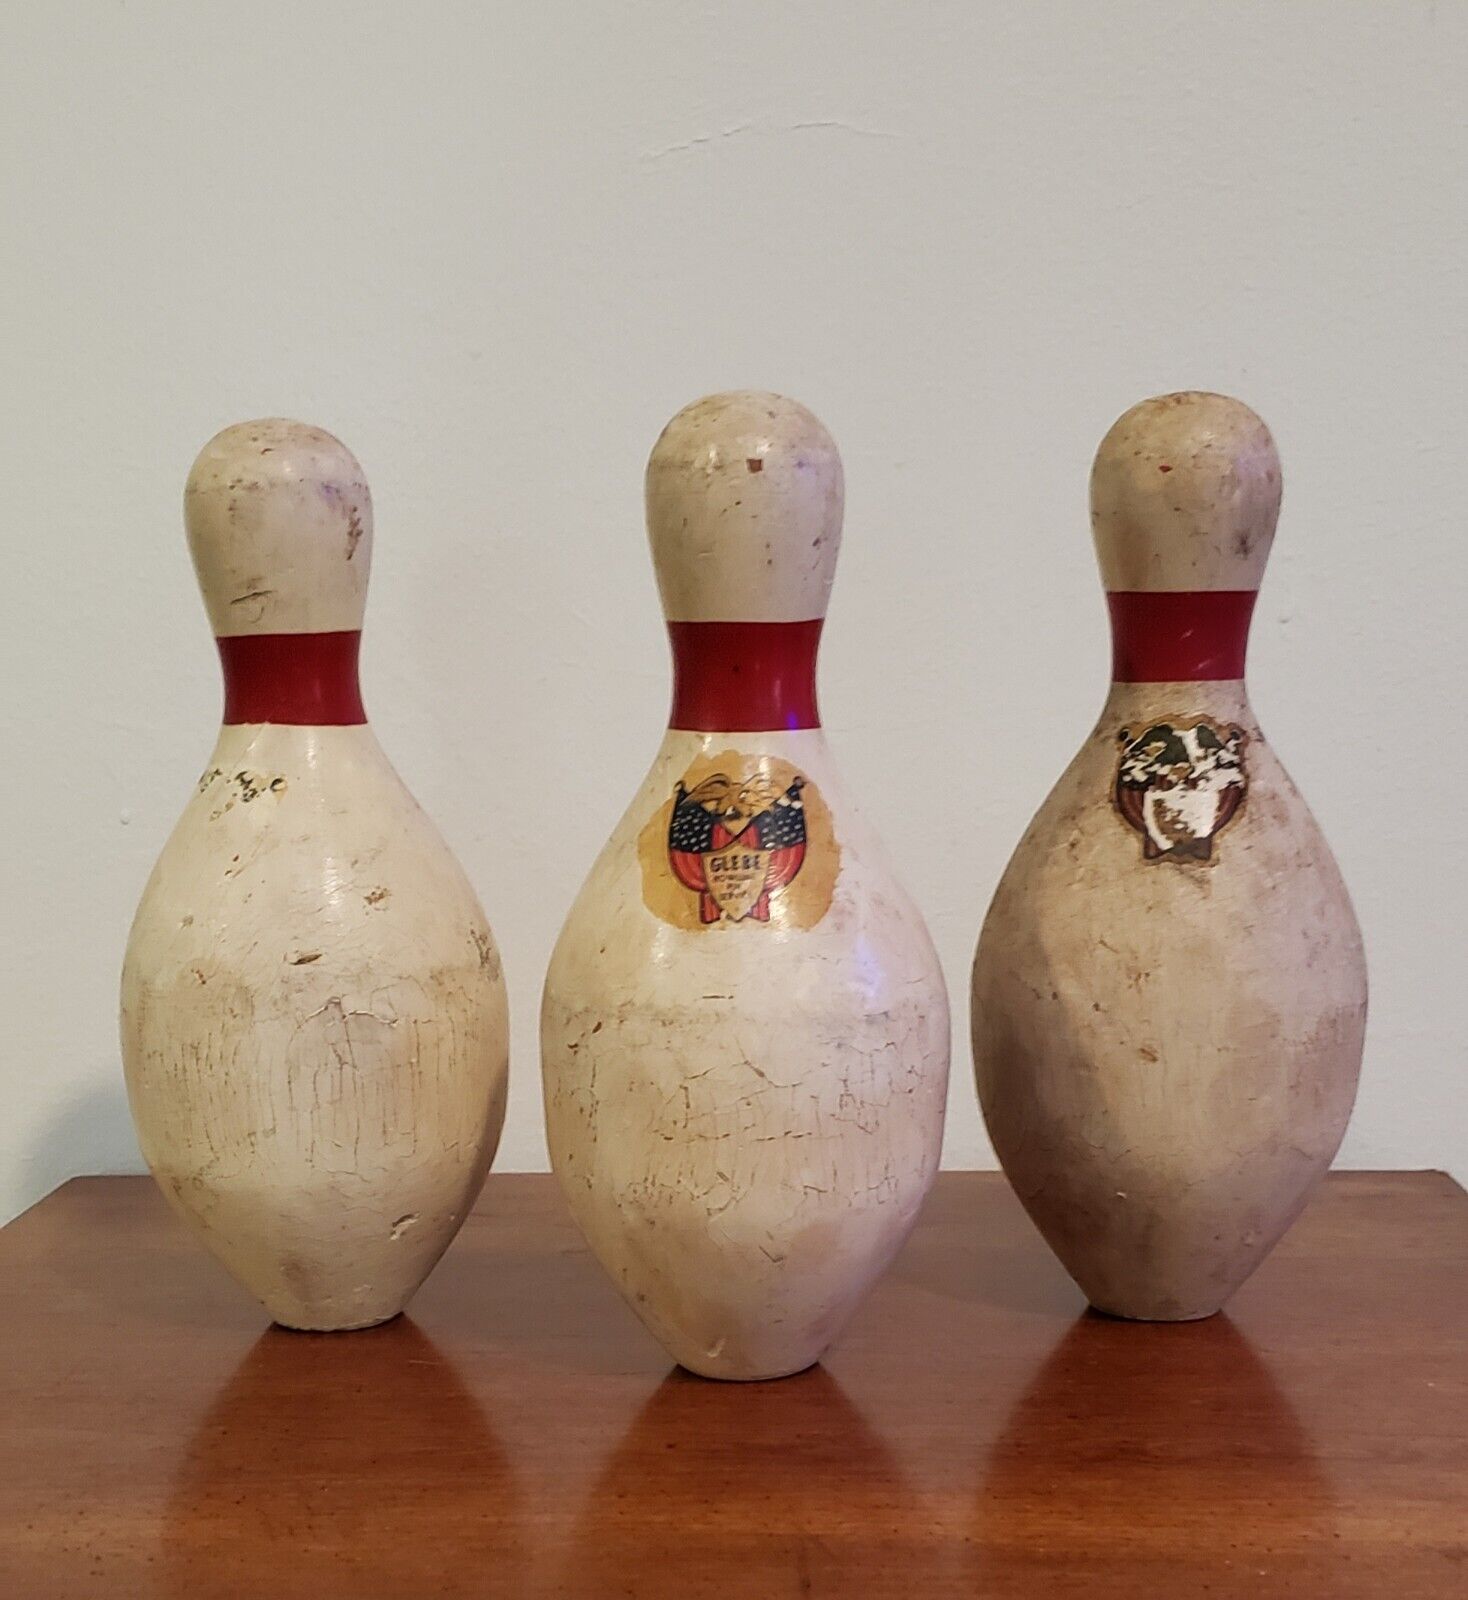 3 Vintage Bowling Pins